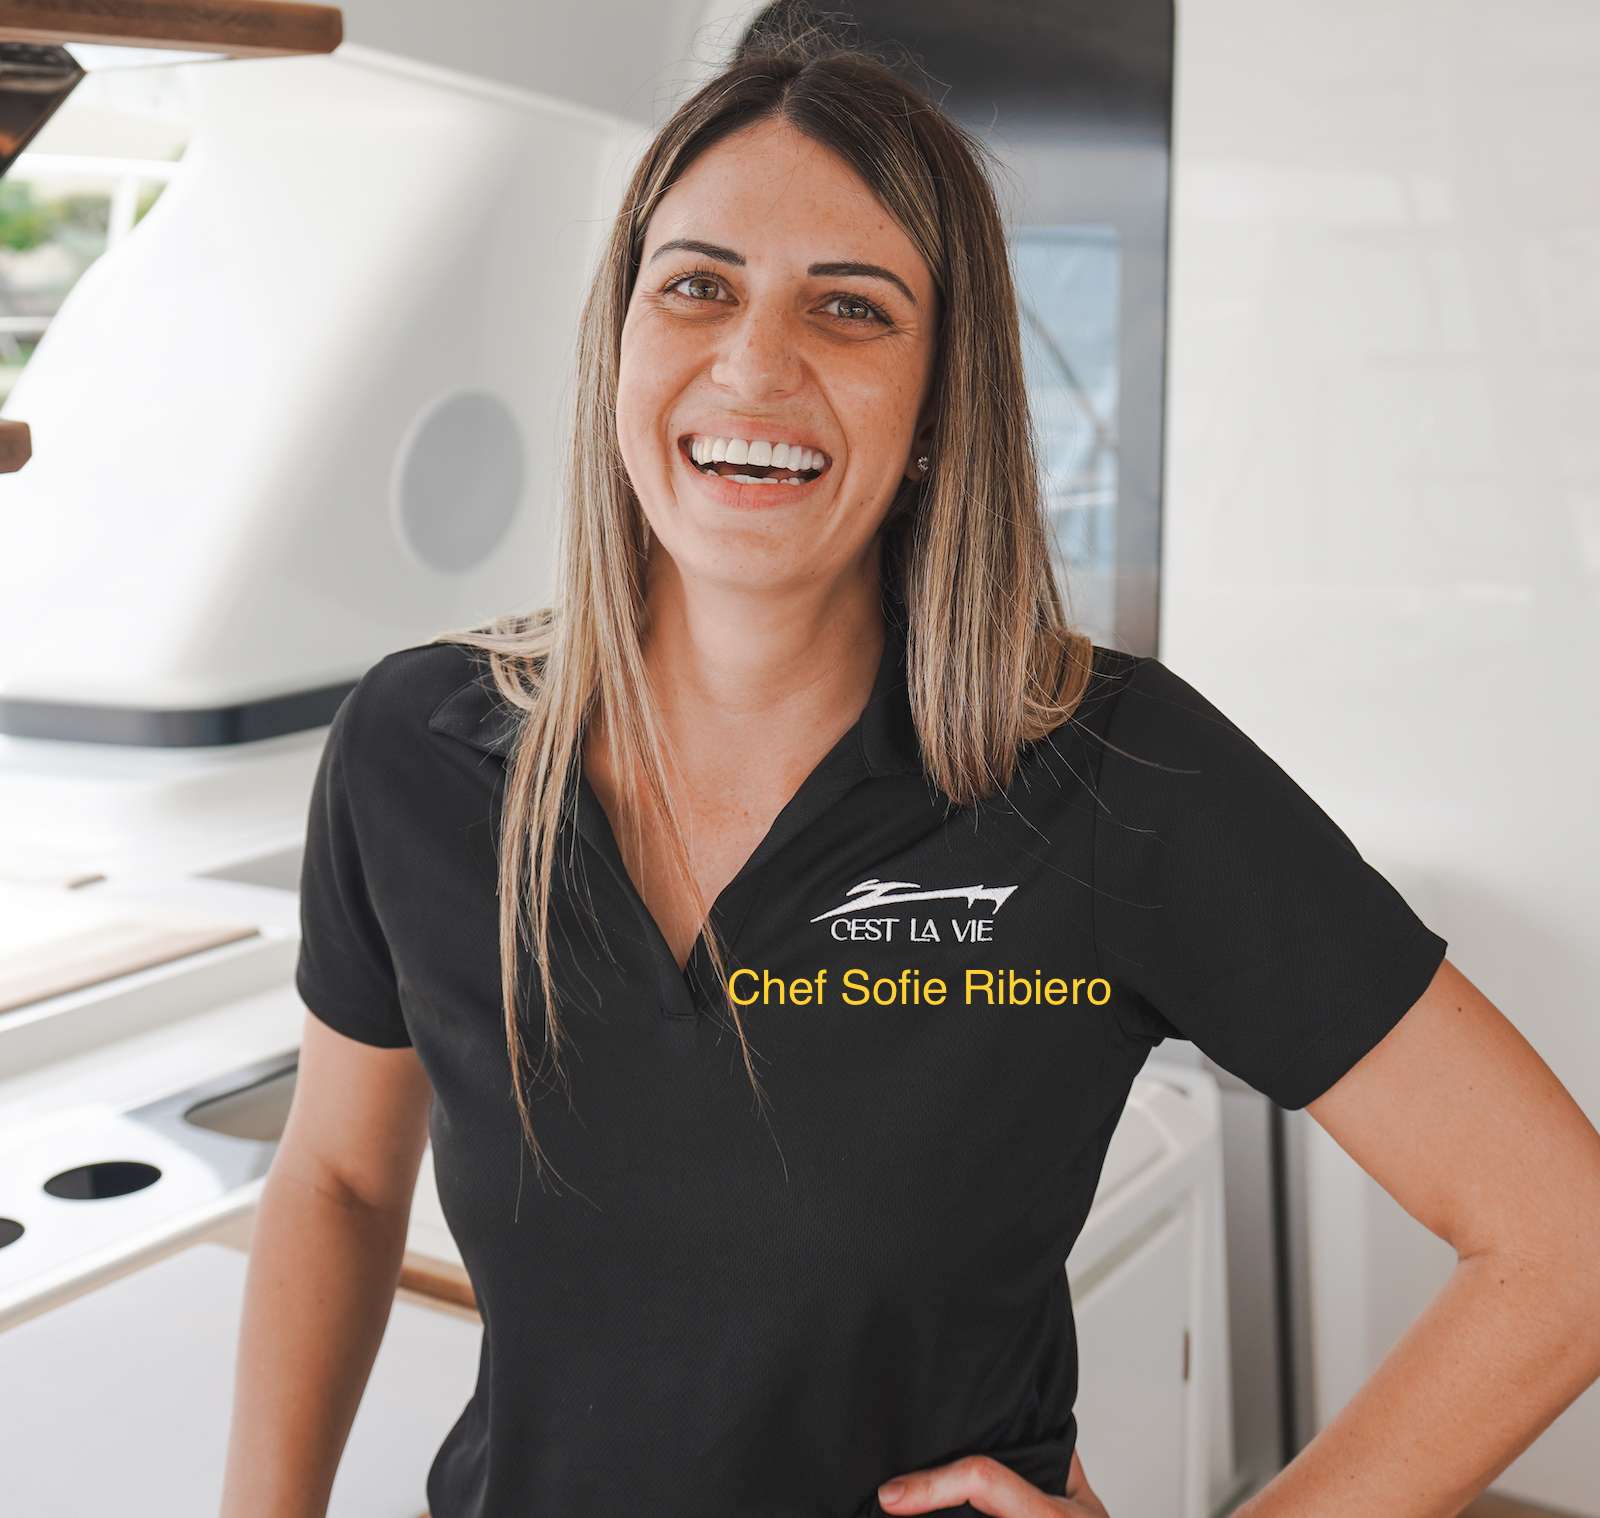 Chef Sofia Ribeiro aboard 67’ Lagoon catamaran C'est La Vie